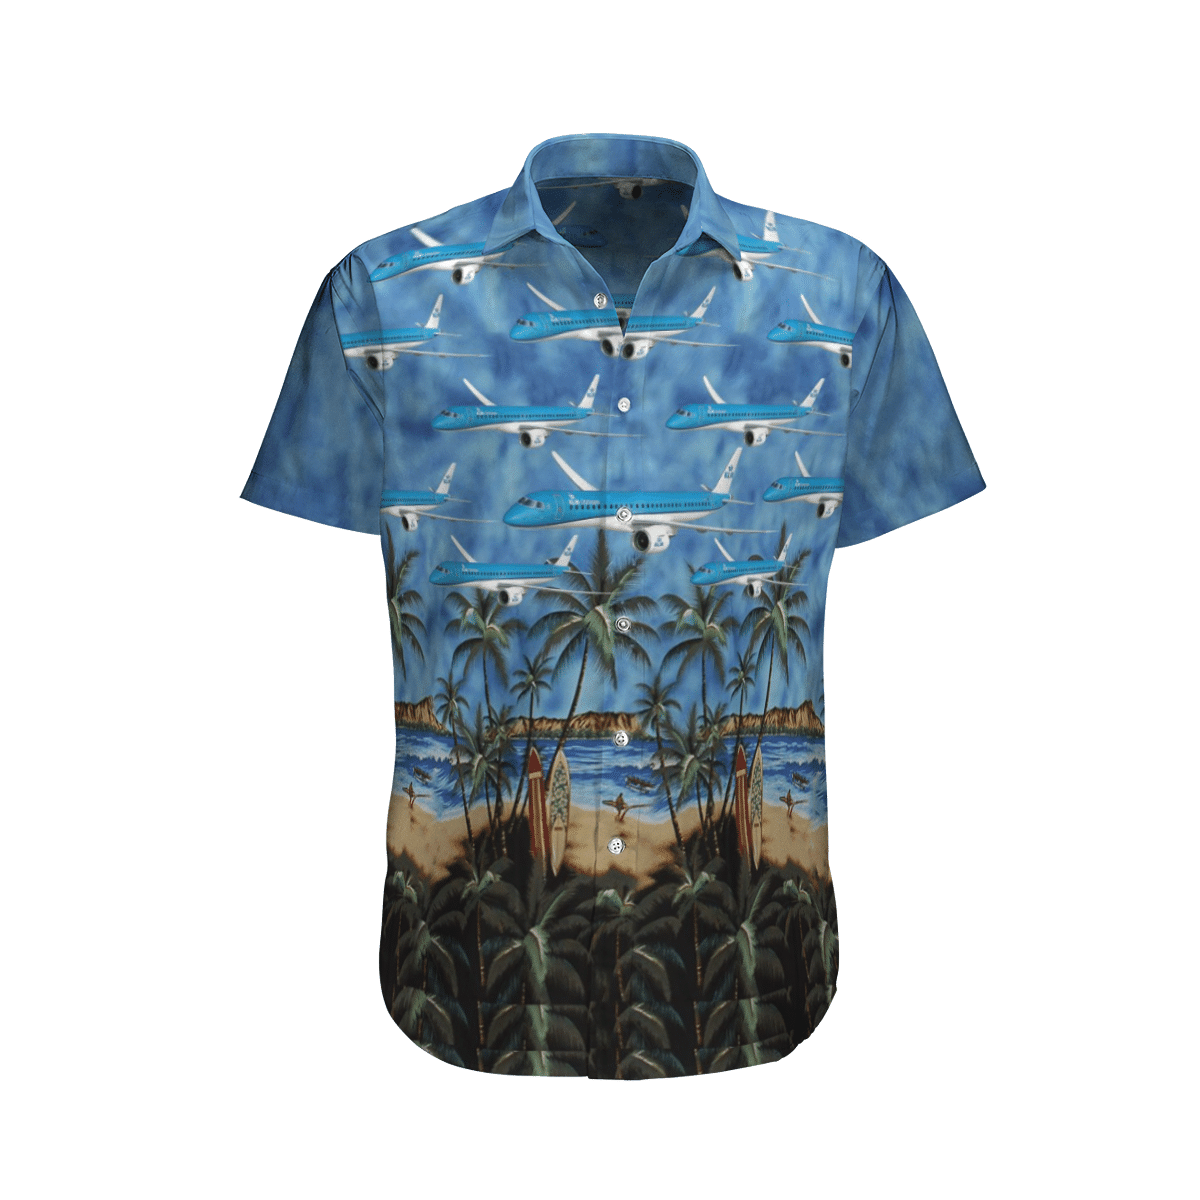 Enjoy your summer with top cool hawaiian shirt below 44